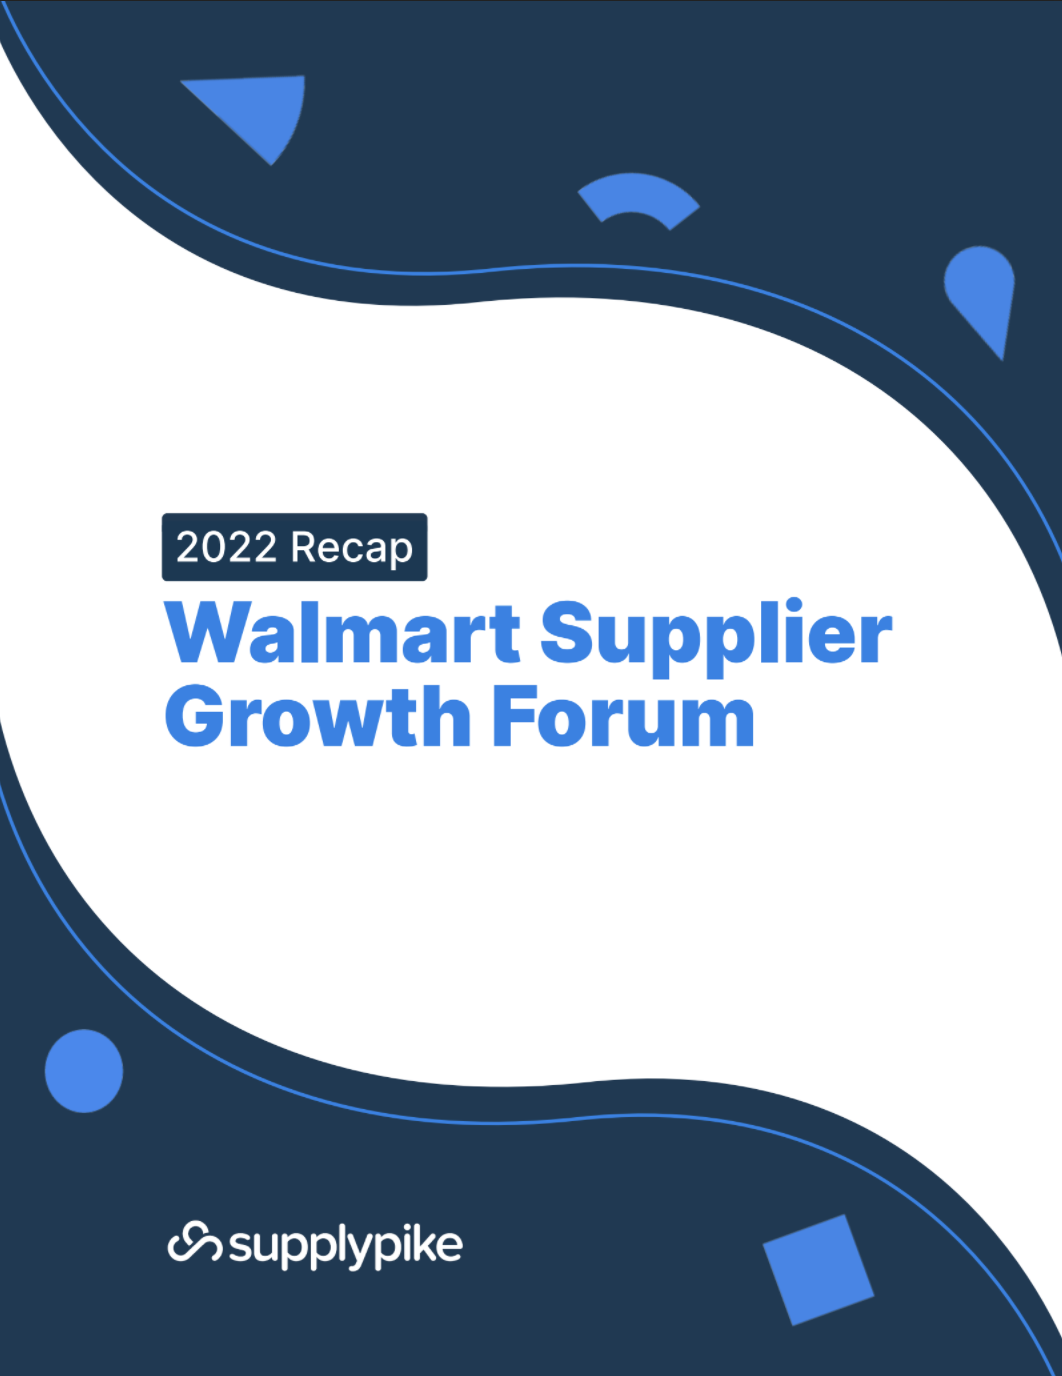 2022 Walmart Supplier Growth Forum Recap